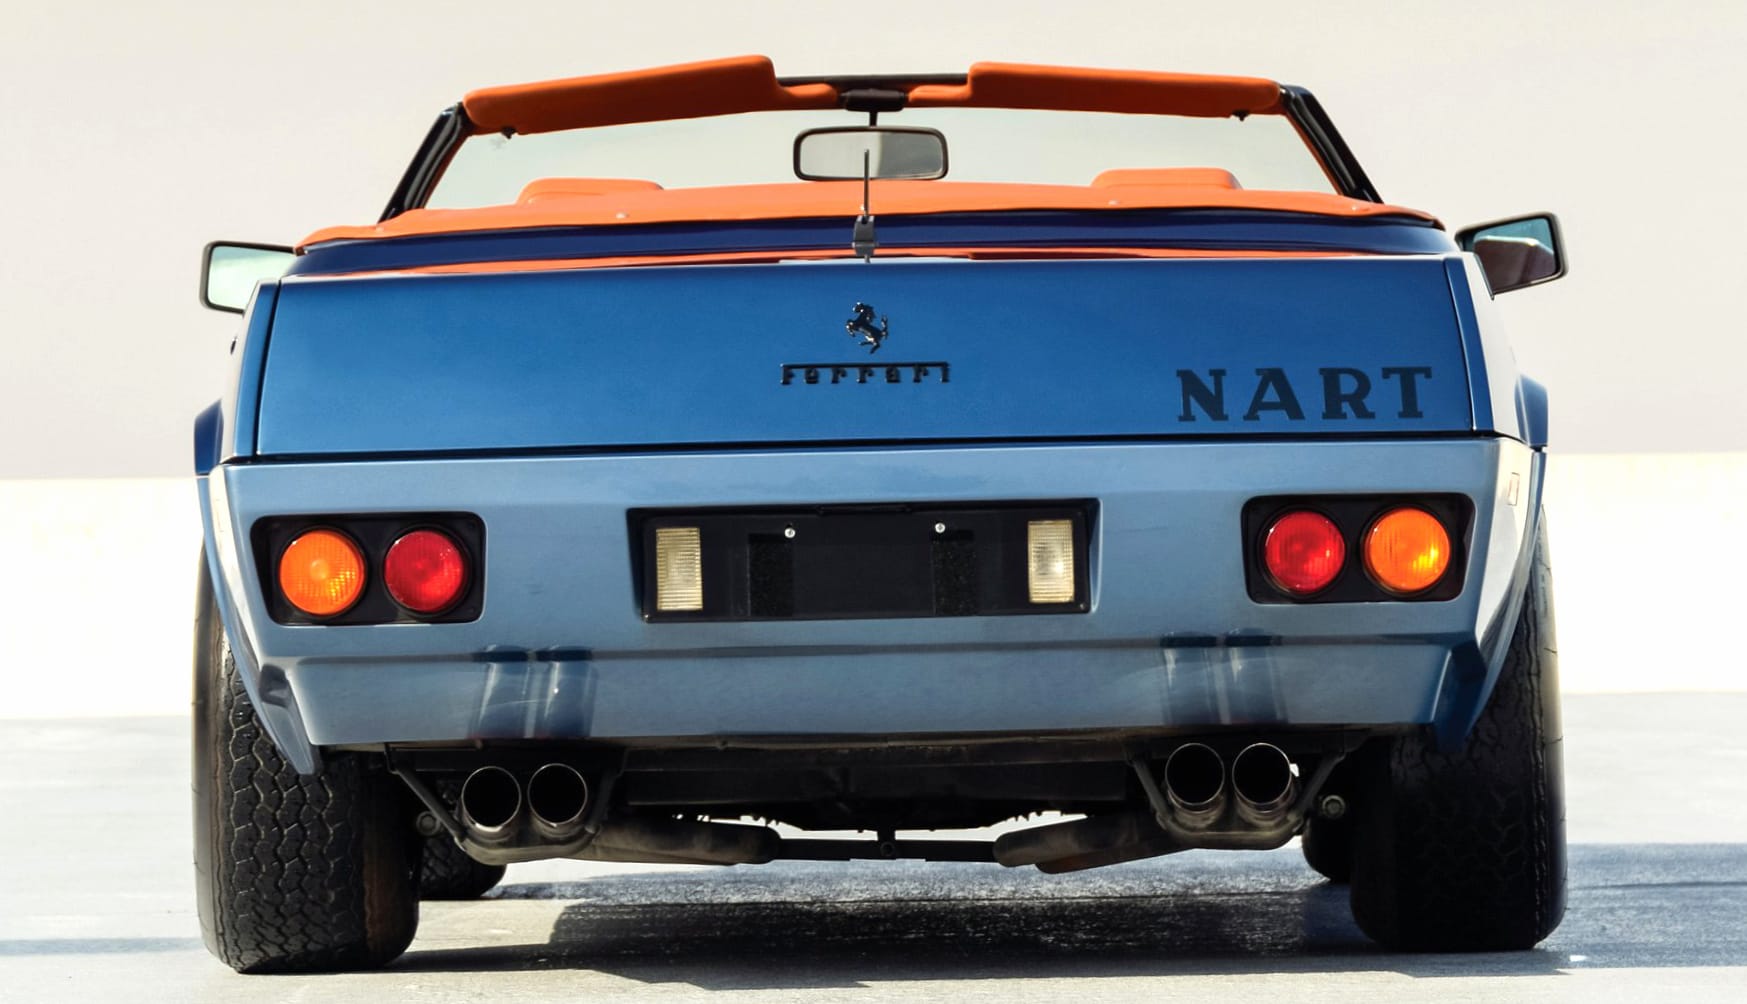 Ferrari 365 GTB 4 NART Spider wallpapers HD quality